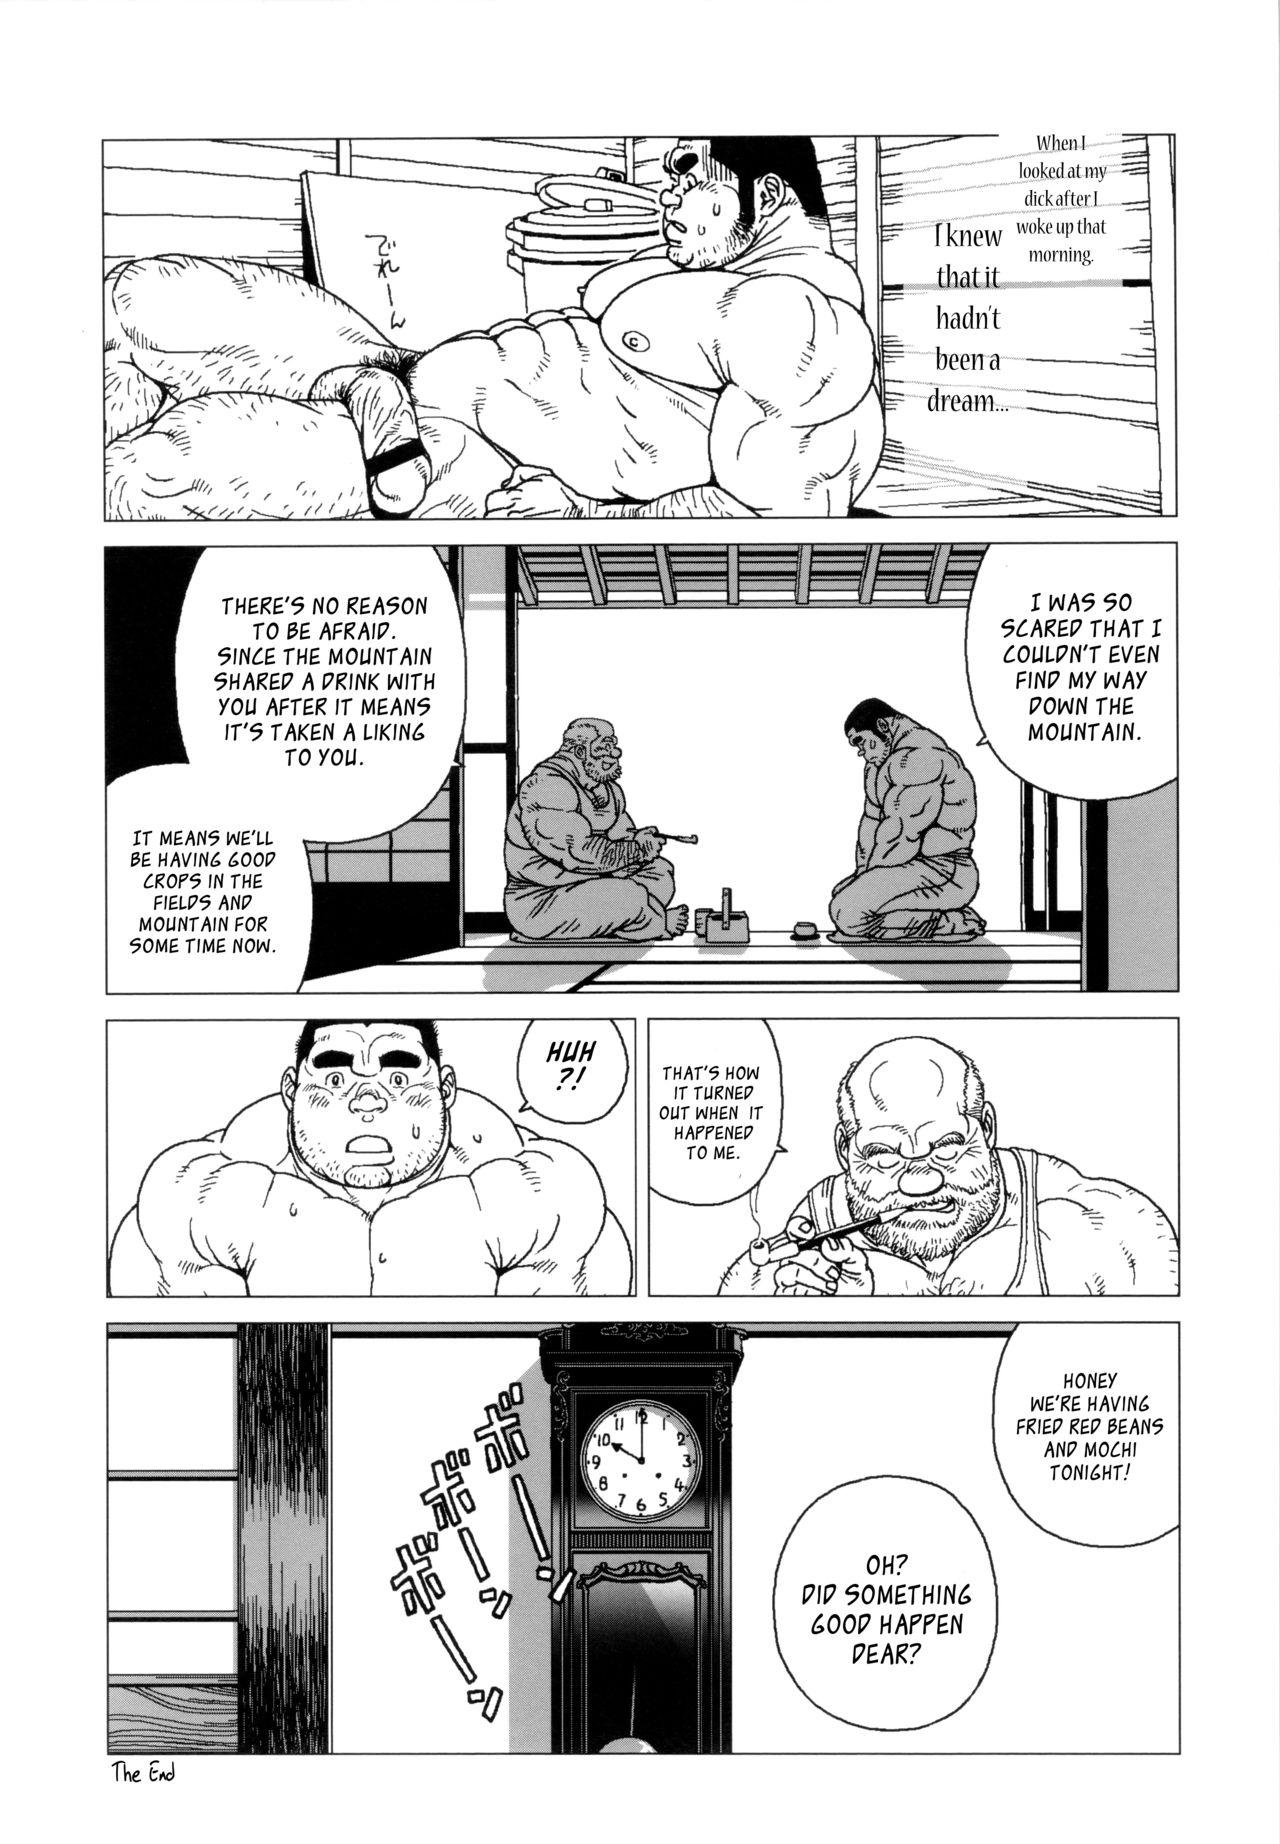 Puta The Mountain and the White Sake Teamskeet - Page 9